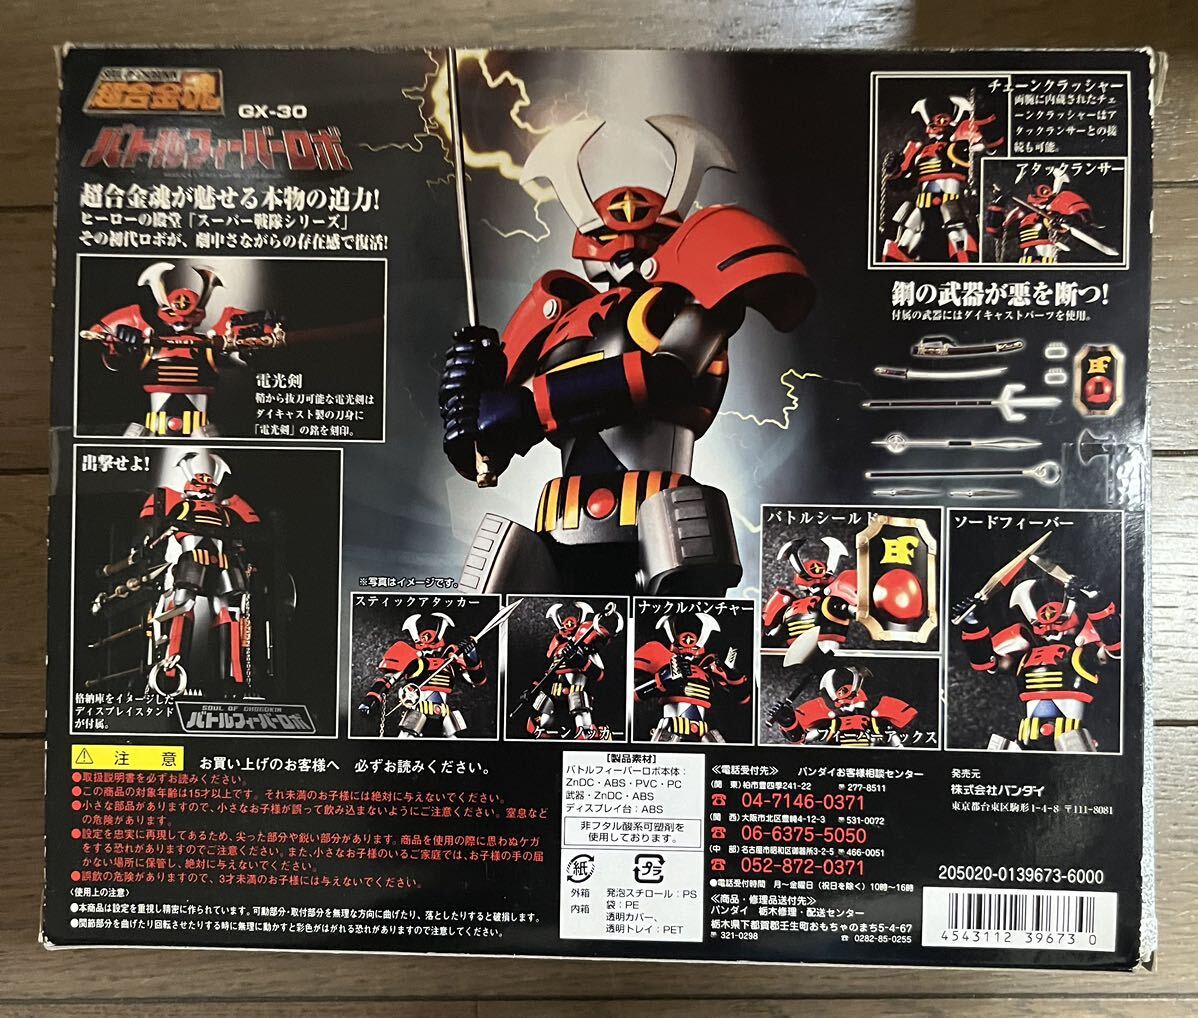  Denshi Sentai Denjiman Chogokin мак большой электромагнитный n подлинная вещь Chogokin душа Battle Fever Robot Battle Fever J GX-30